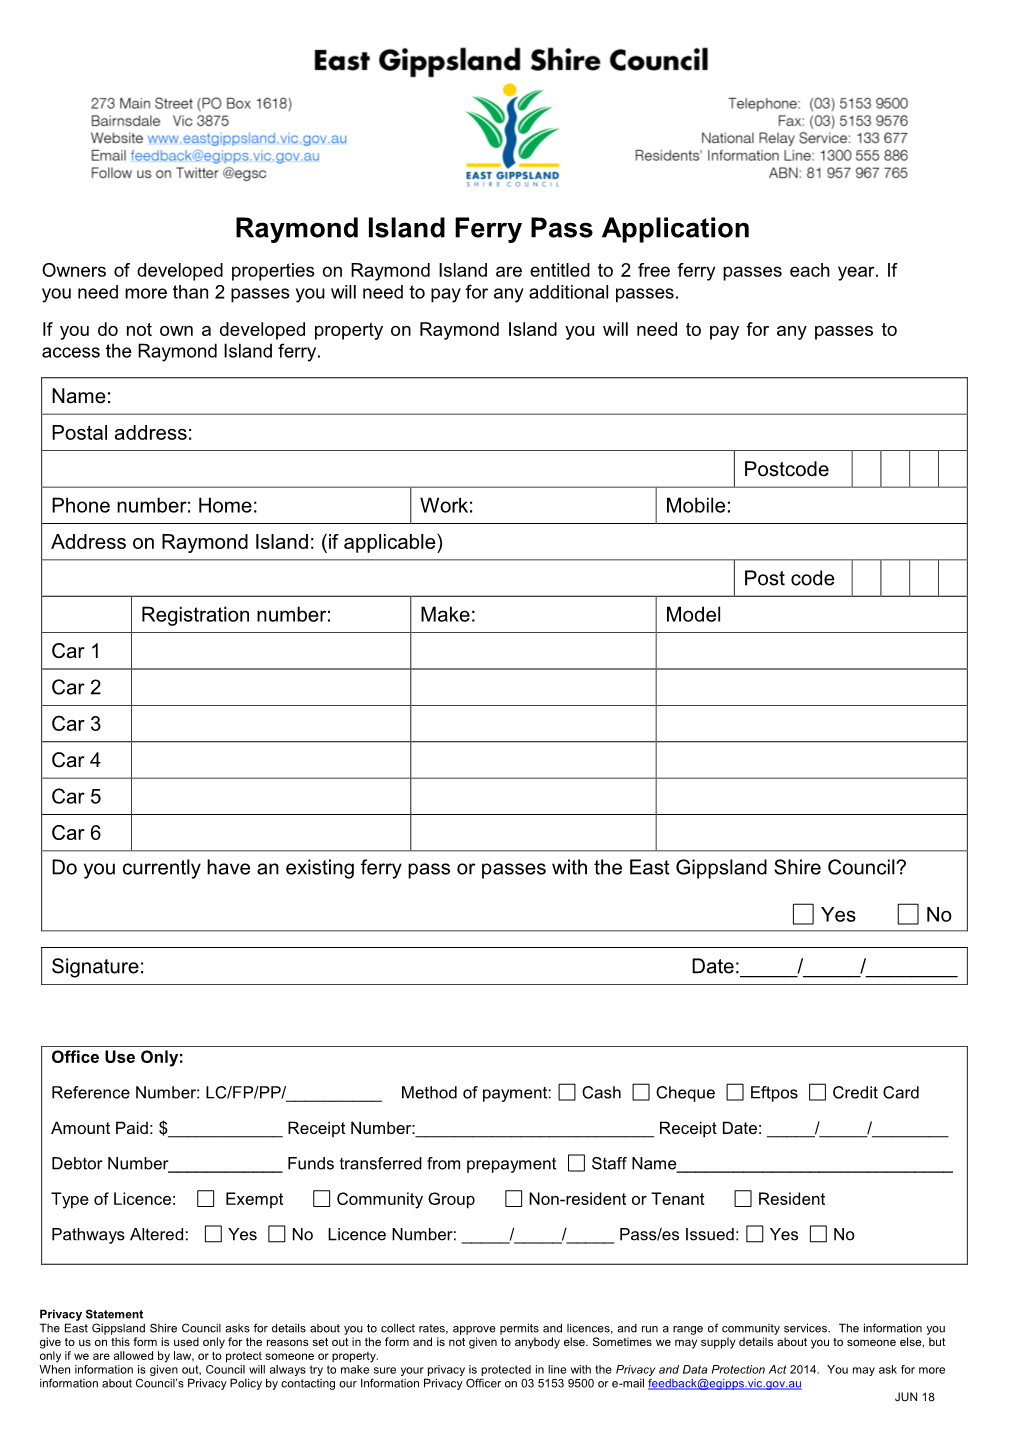 Raymond Island Ferry Pass Application